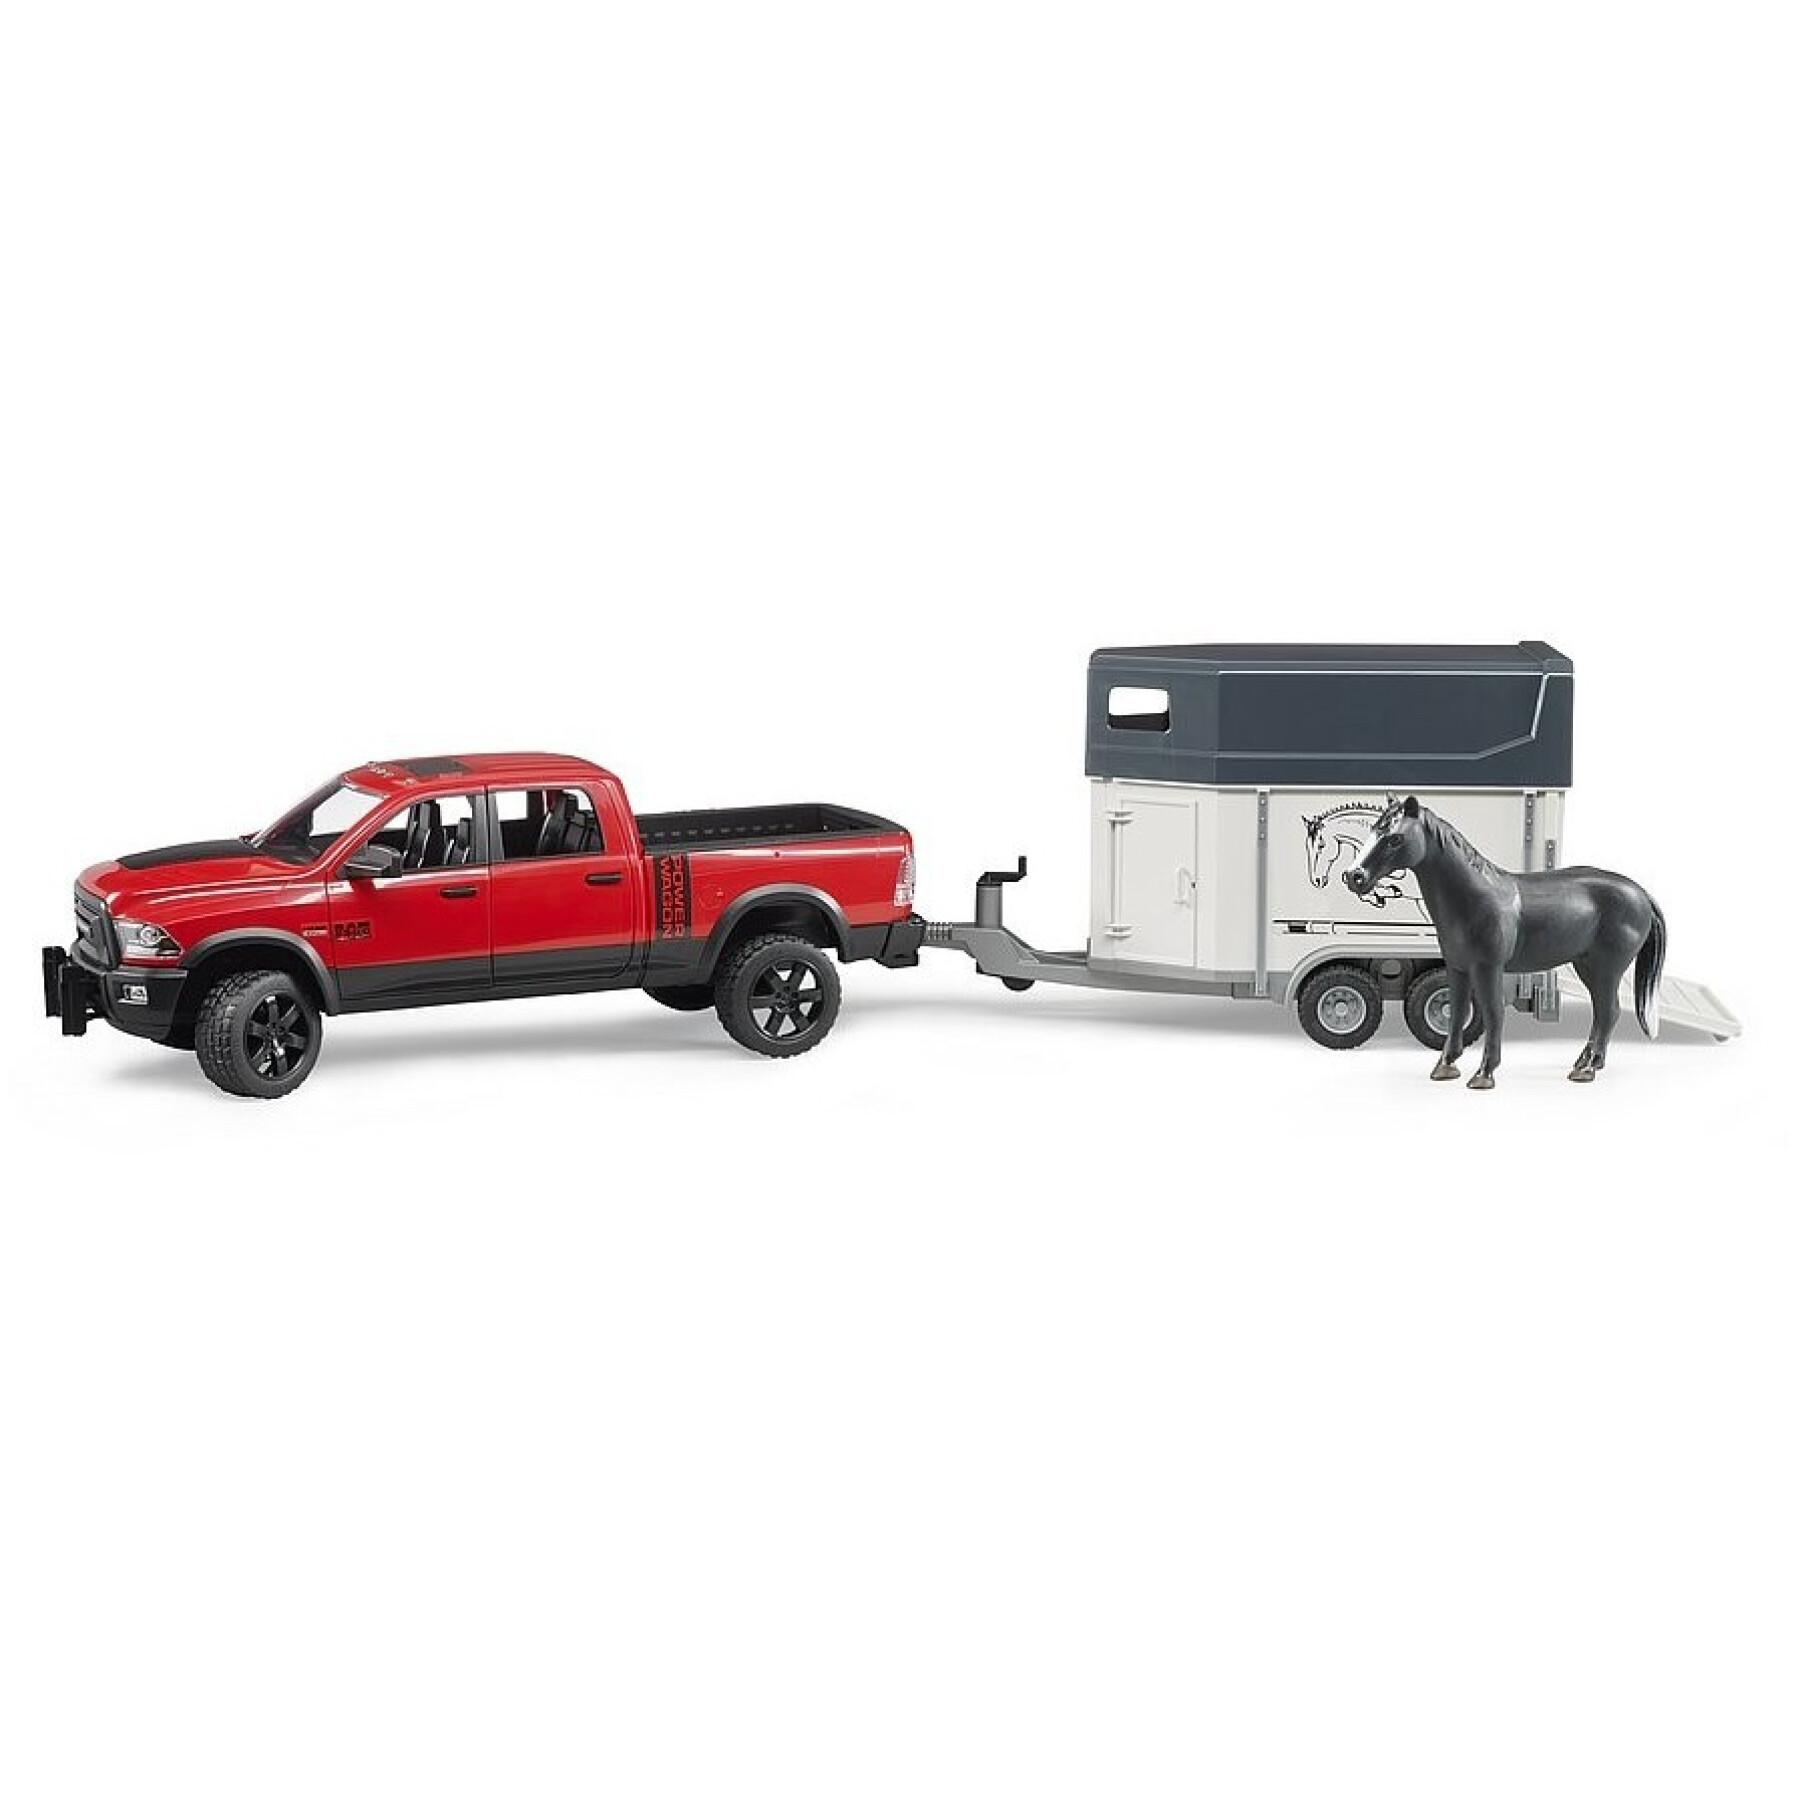 Car games with horse trailer Bruder RAM 2500 Power wagon